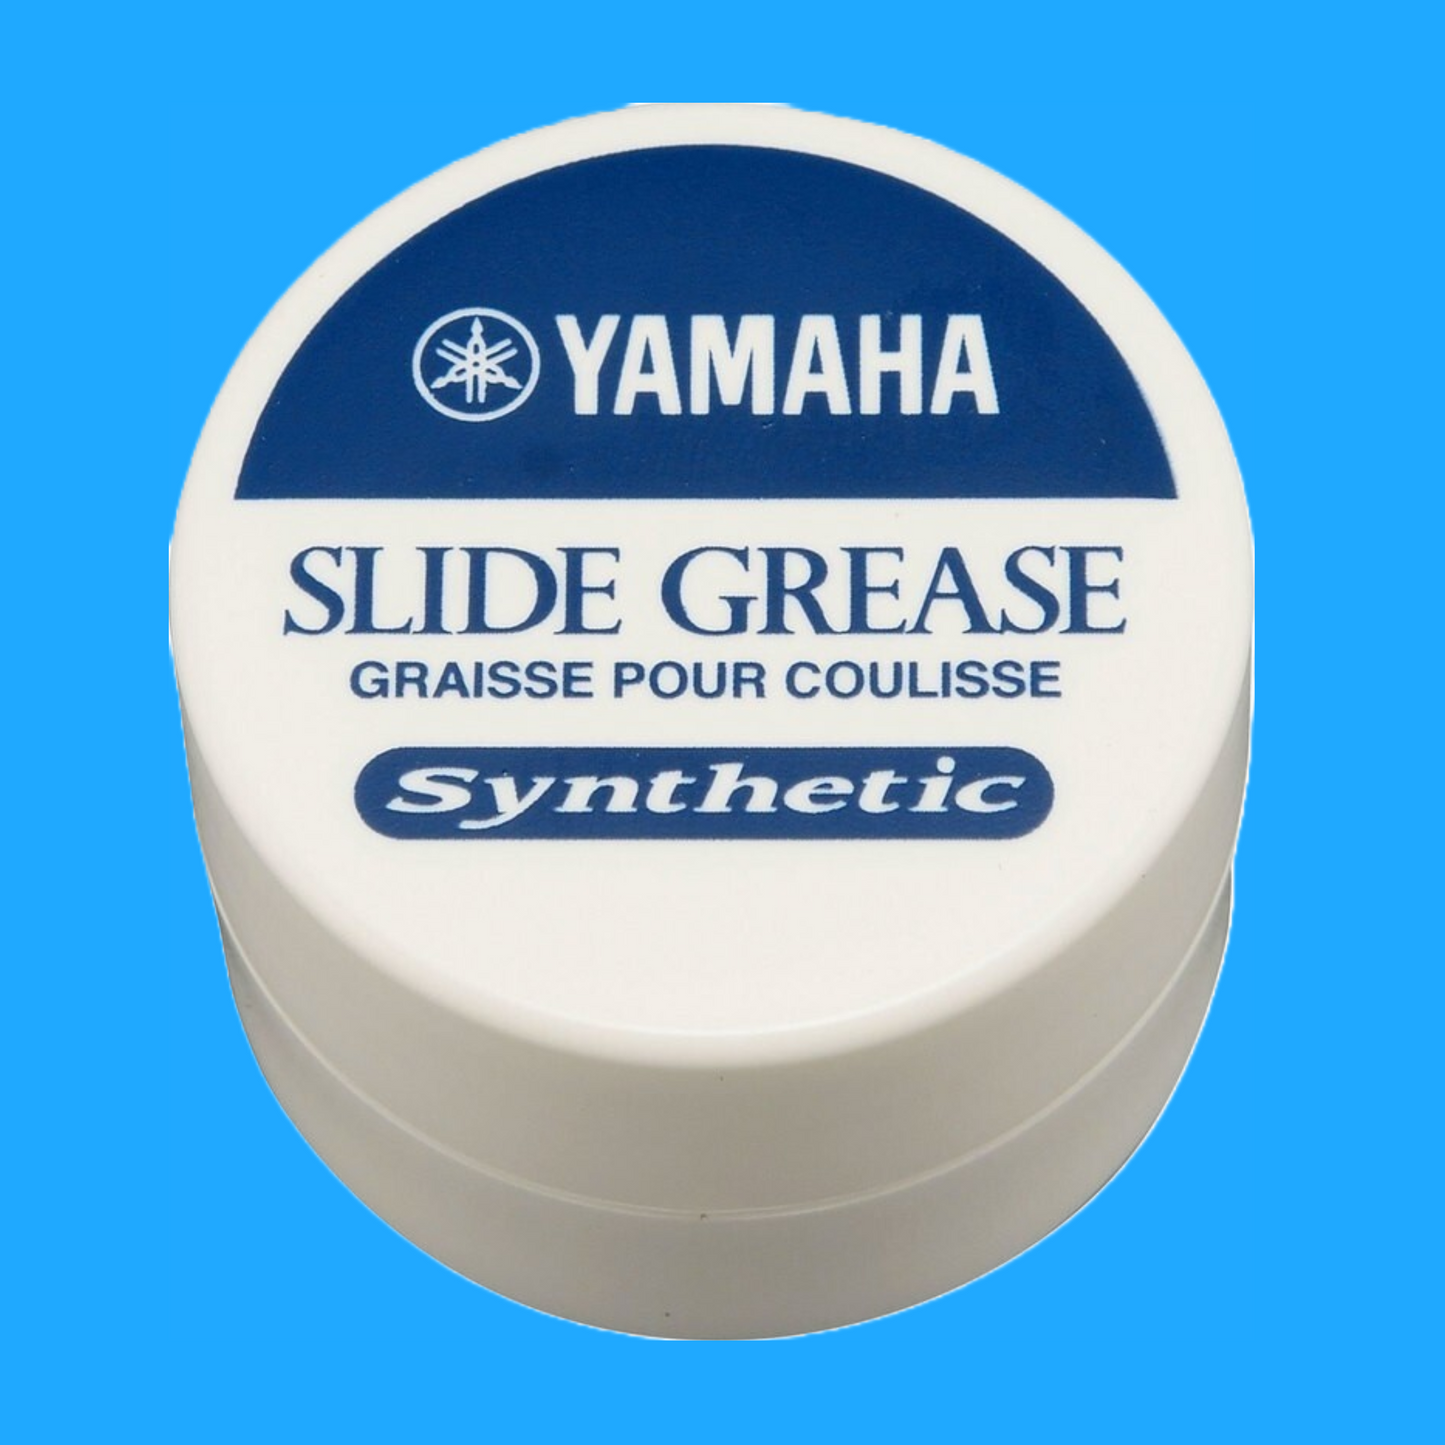 Yamaha Slide Grease Tub (10g) - 5 Pack